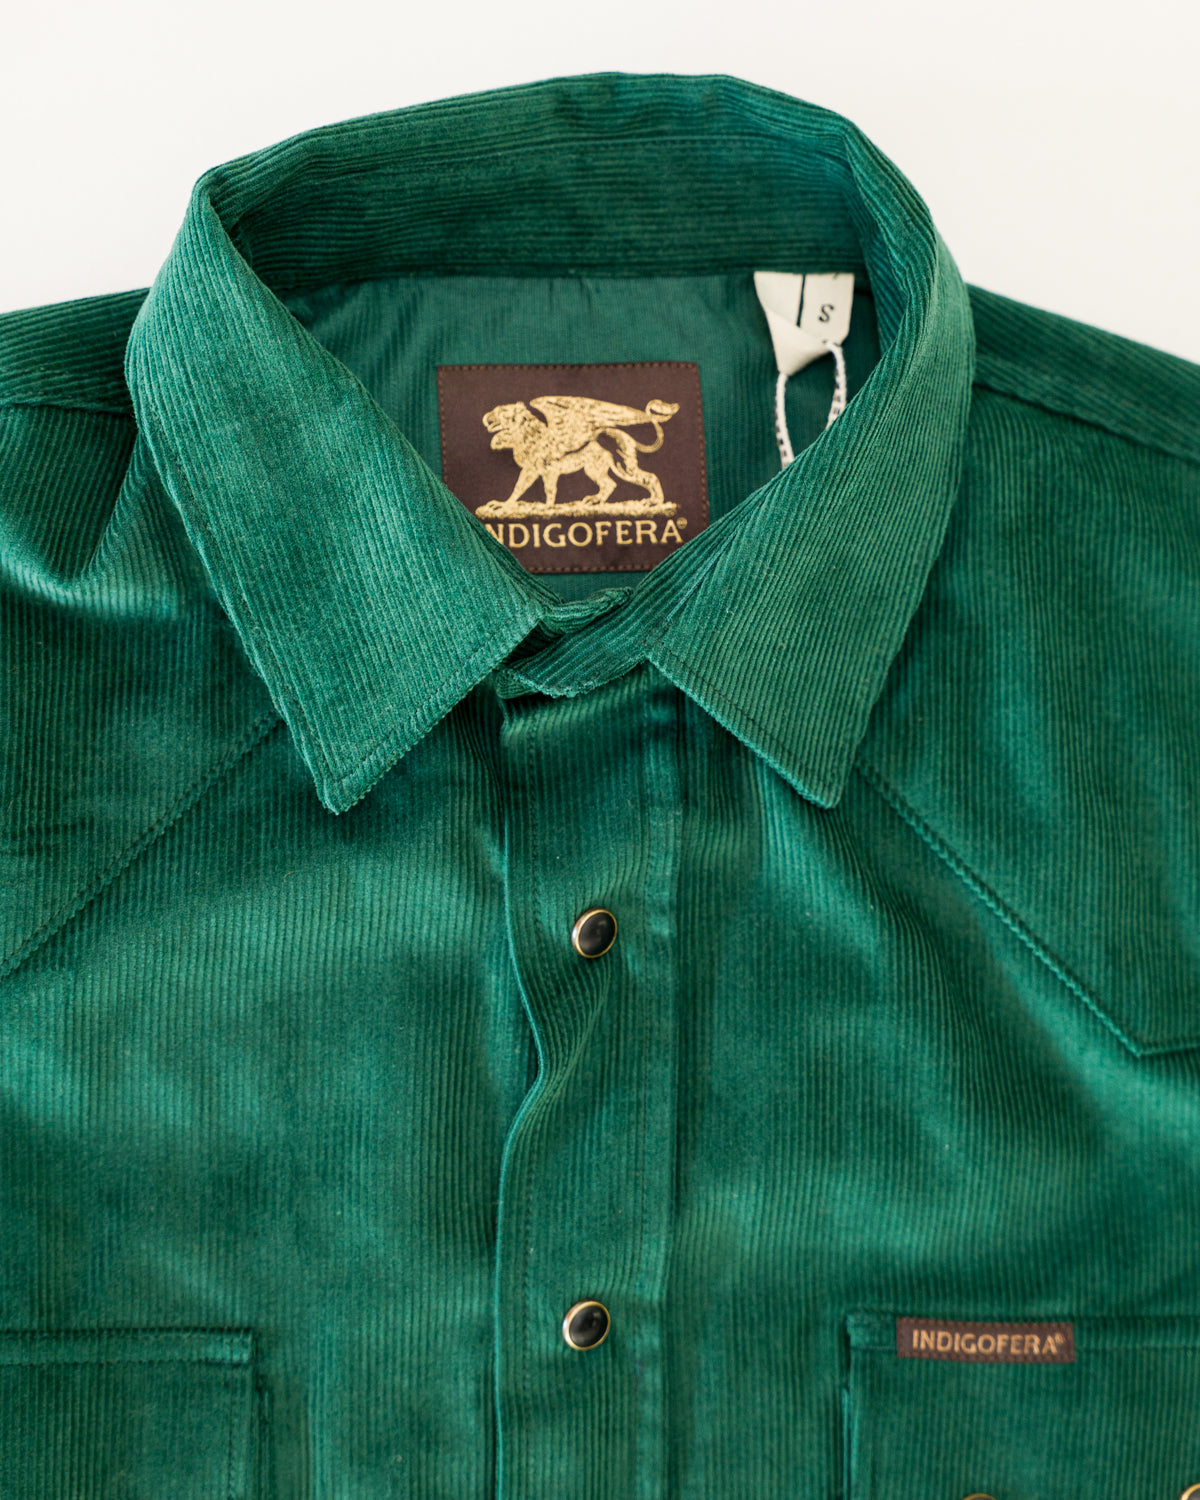 Dollard Sawtooth Shirt - Corduroy Green